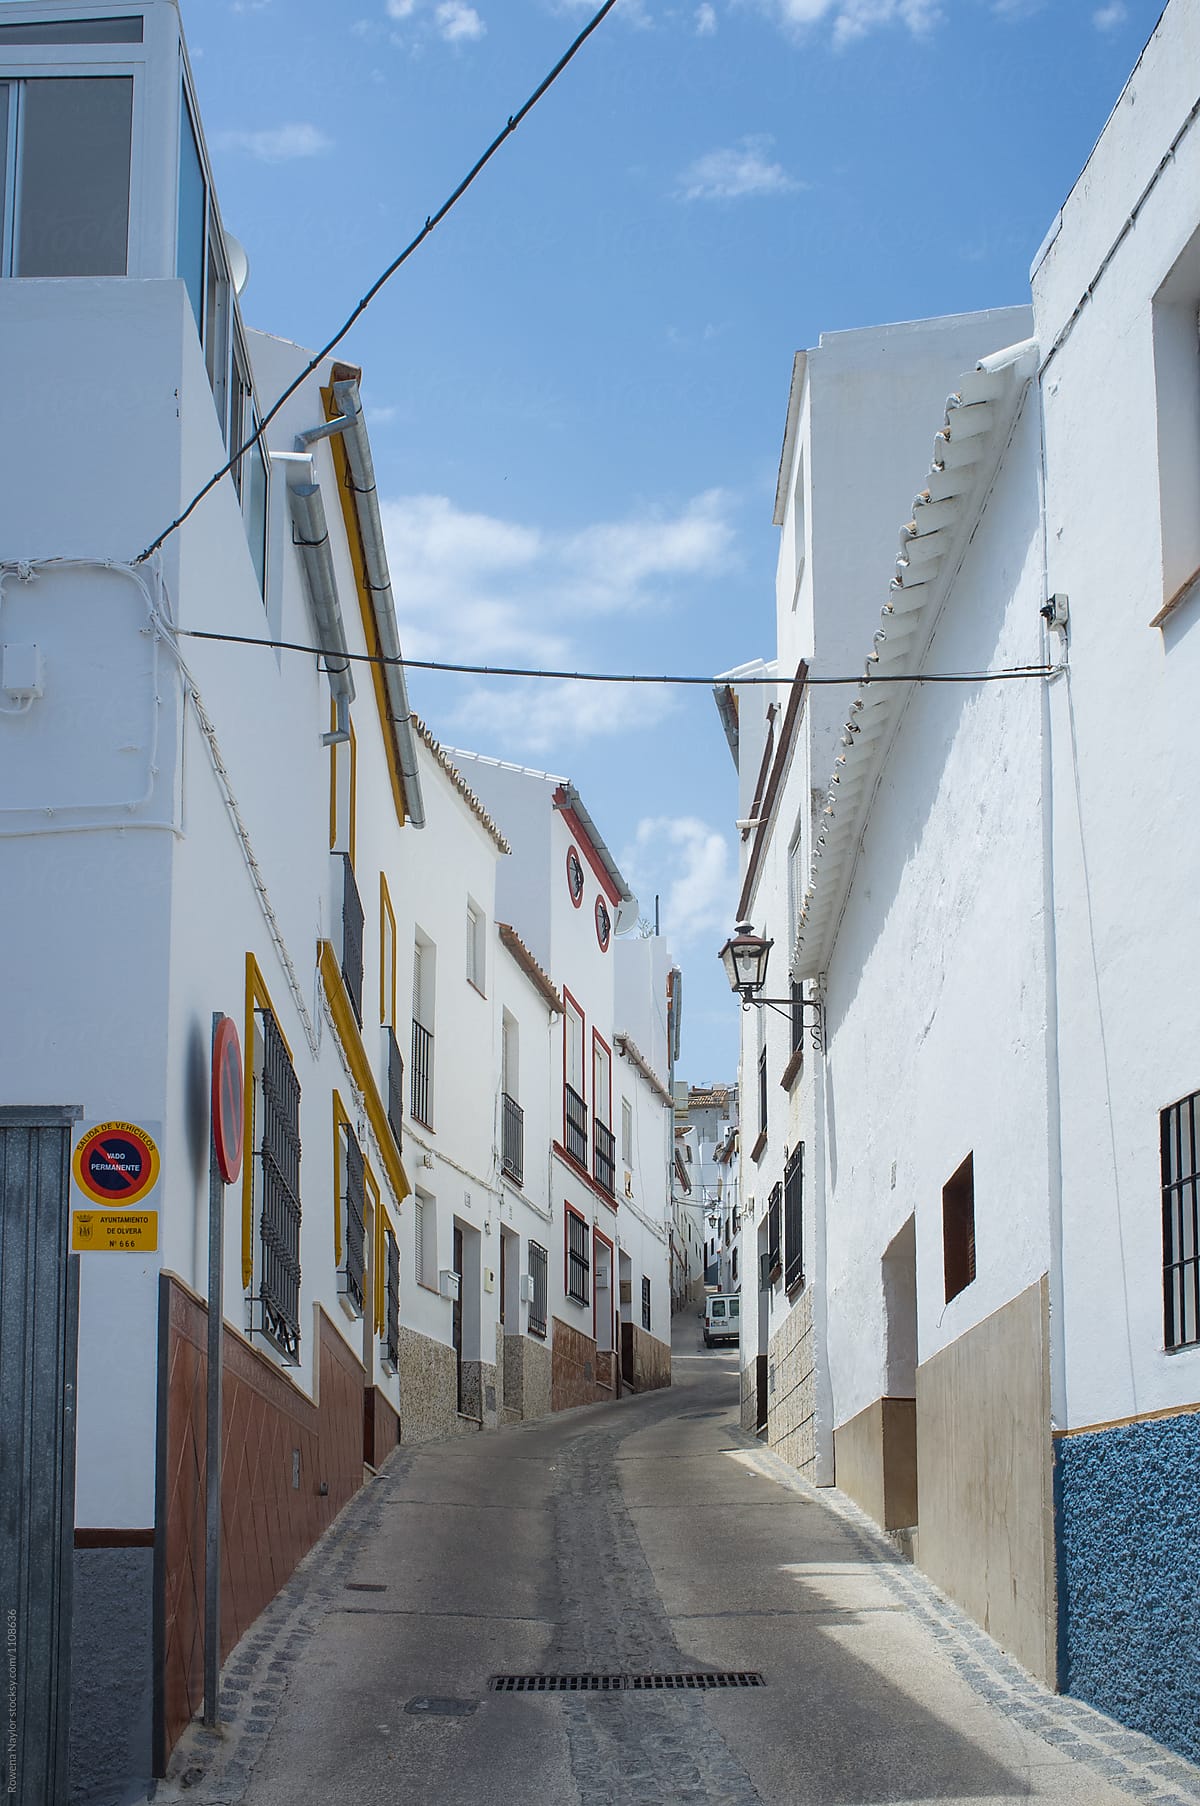 Narrow street in small Spanish village